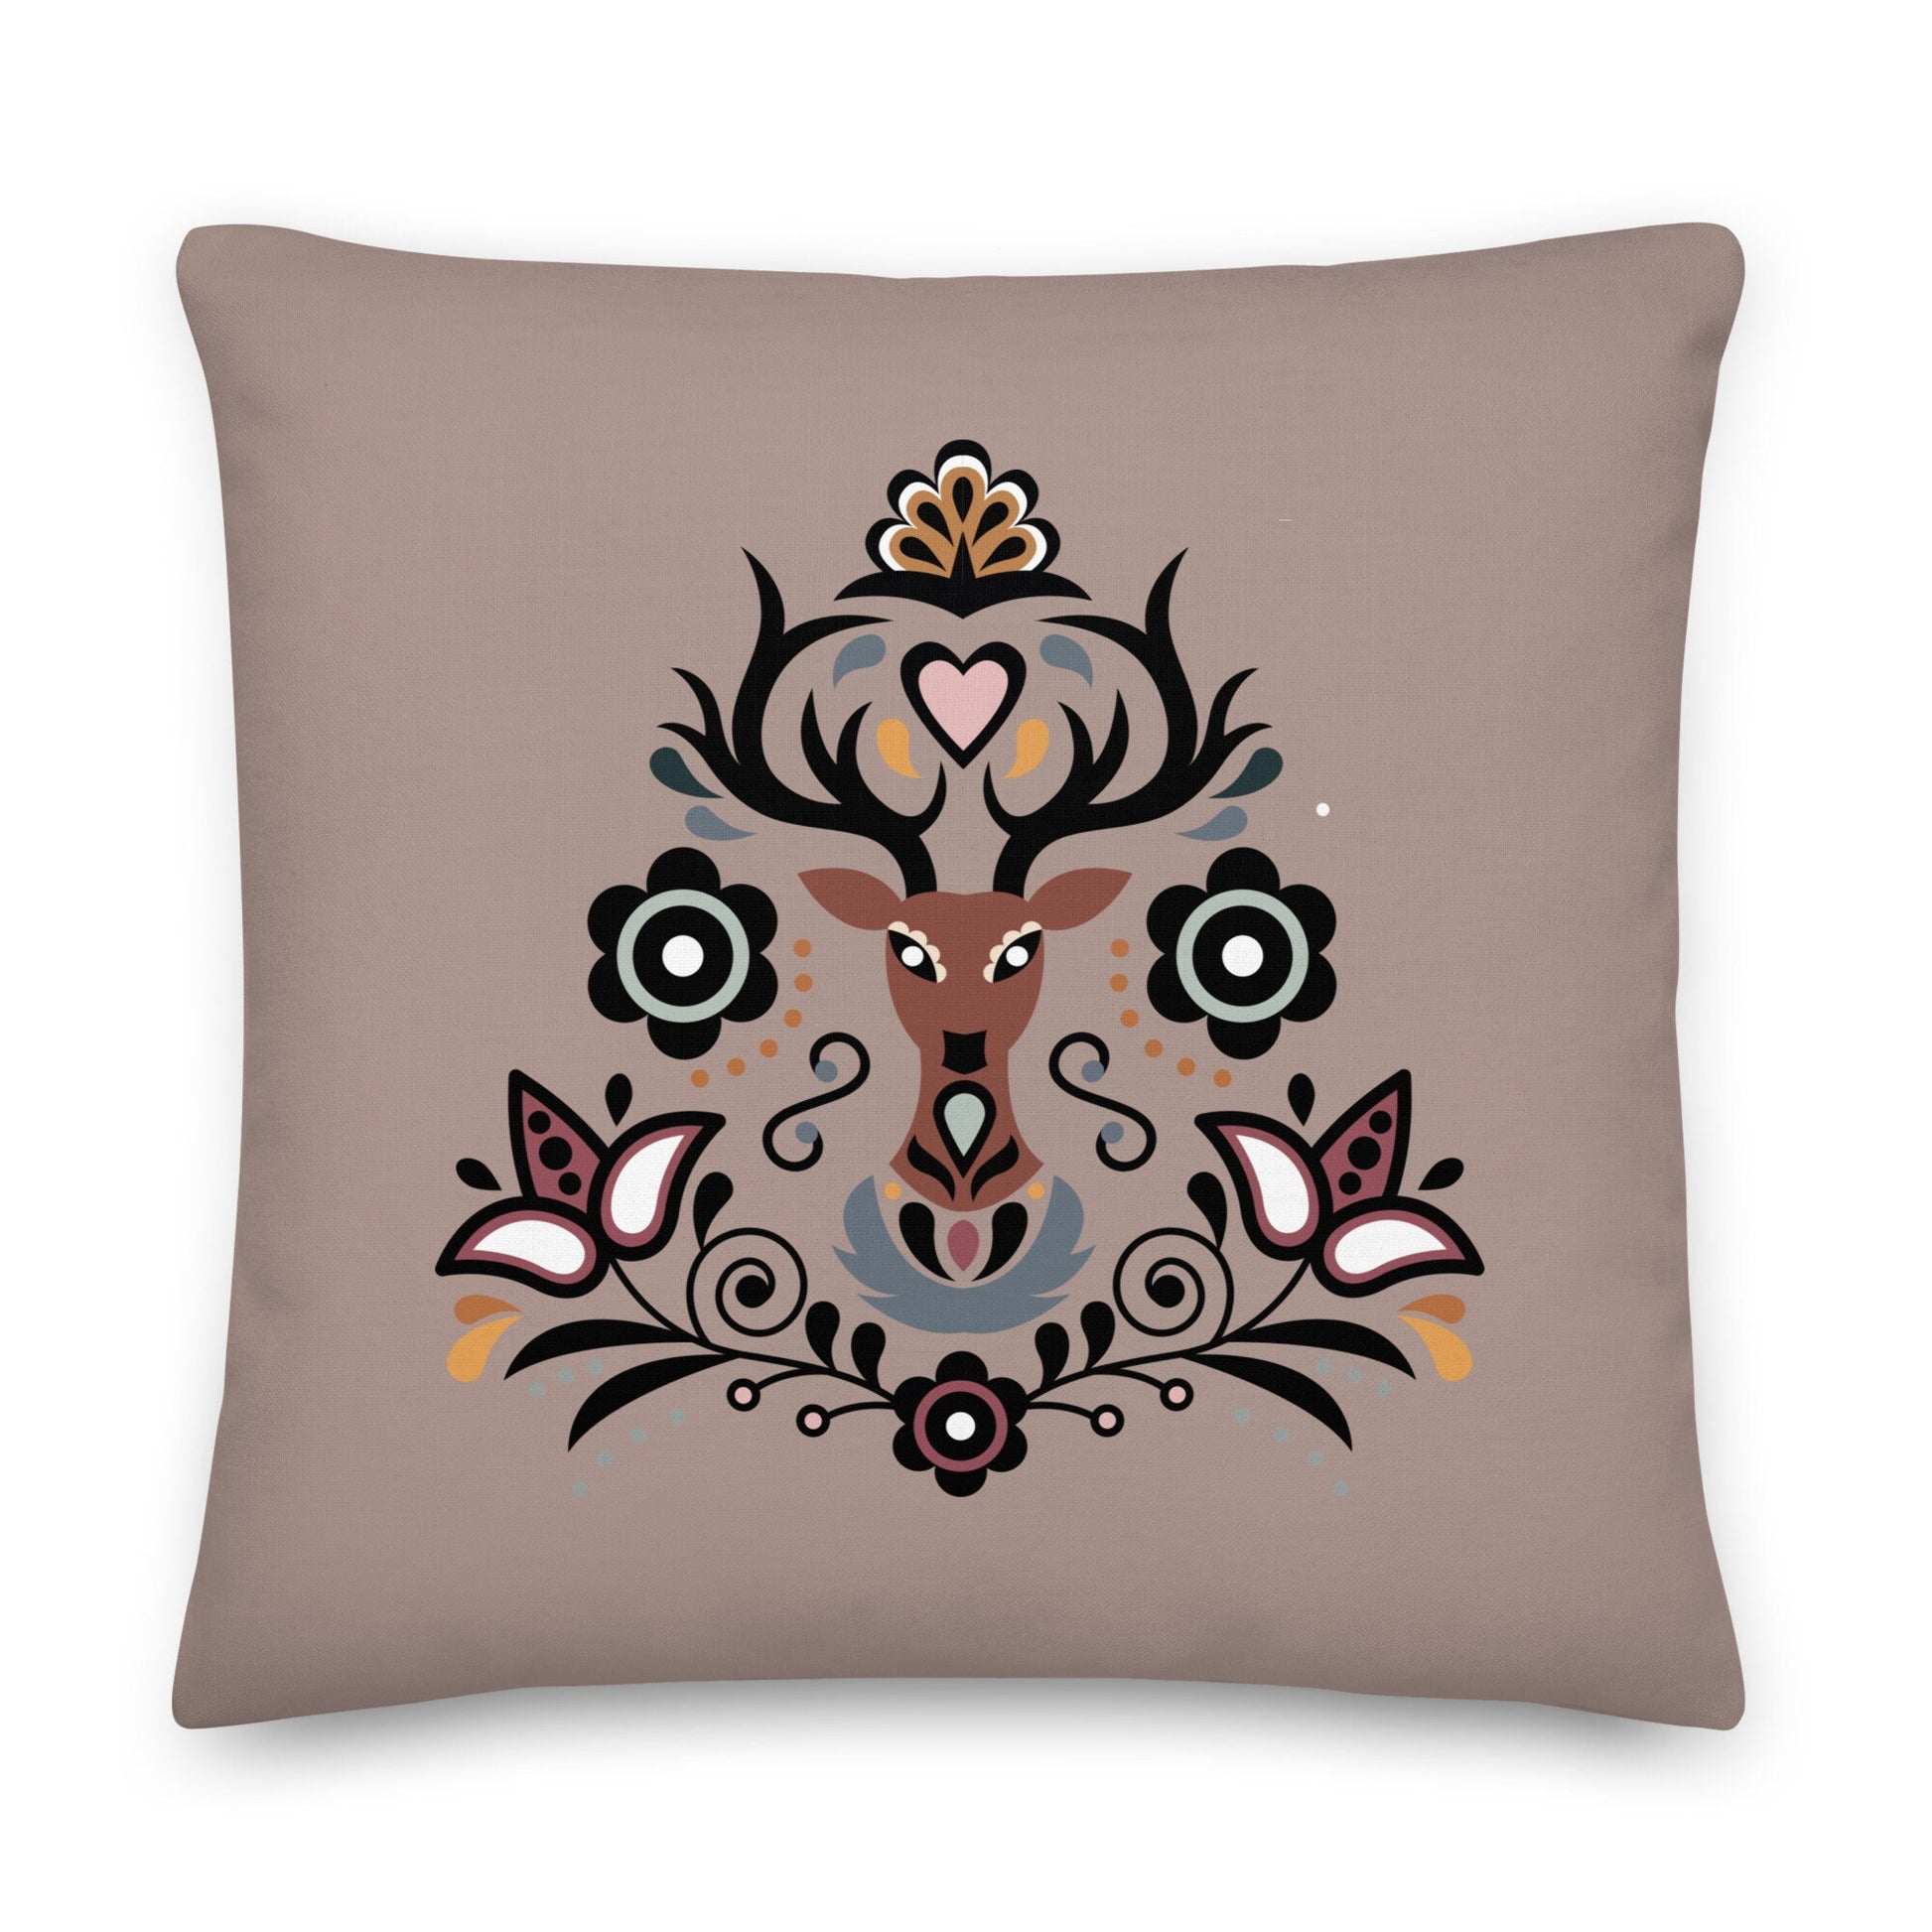 Swedish Deer Throw Pillow, Scandinavian Hygge Pillow, Nordic Decor, Decorative Pillow, Housewarming Gift- Christmas Decor, Indoor, Outdoor